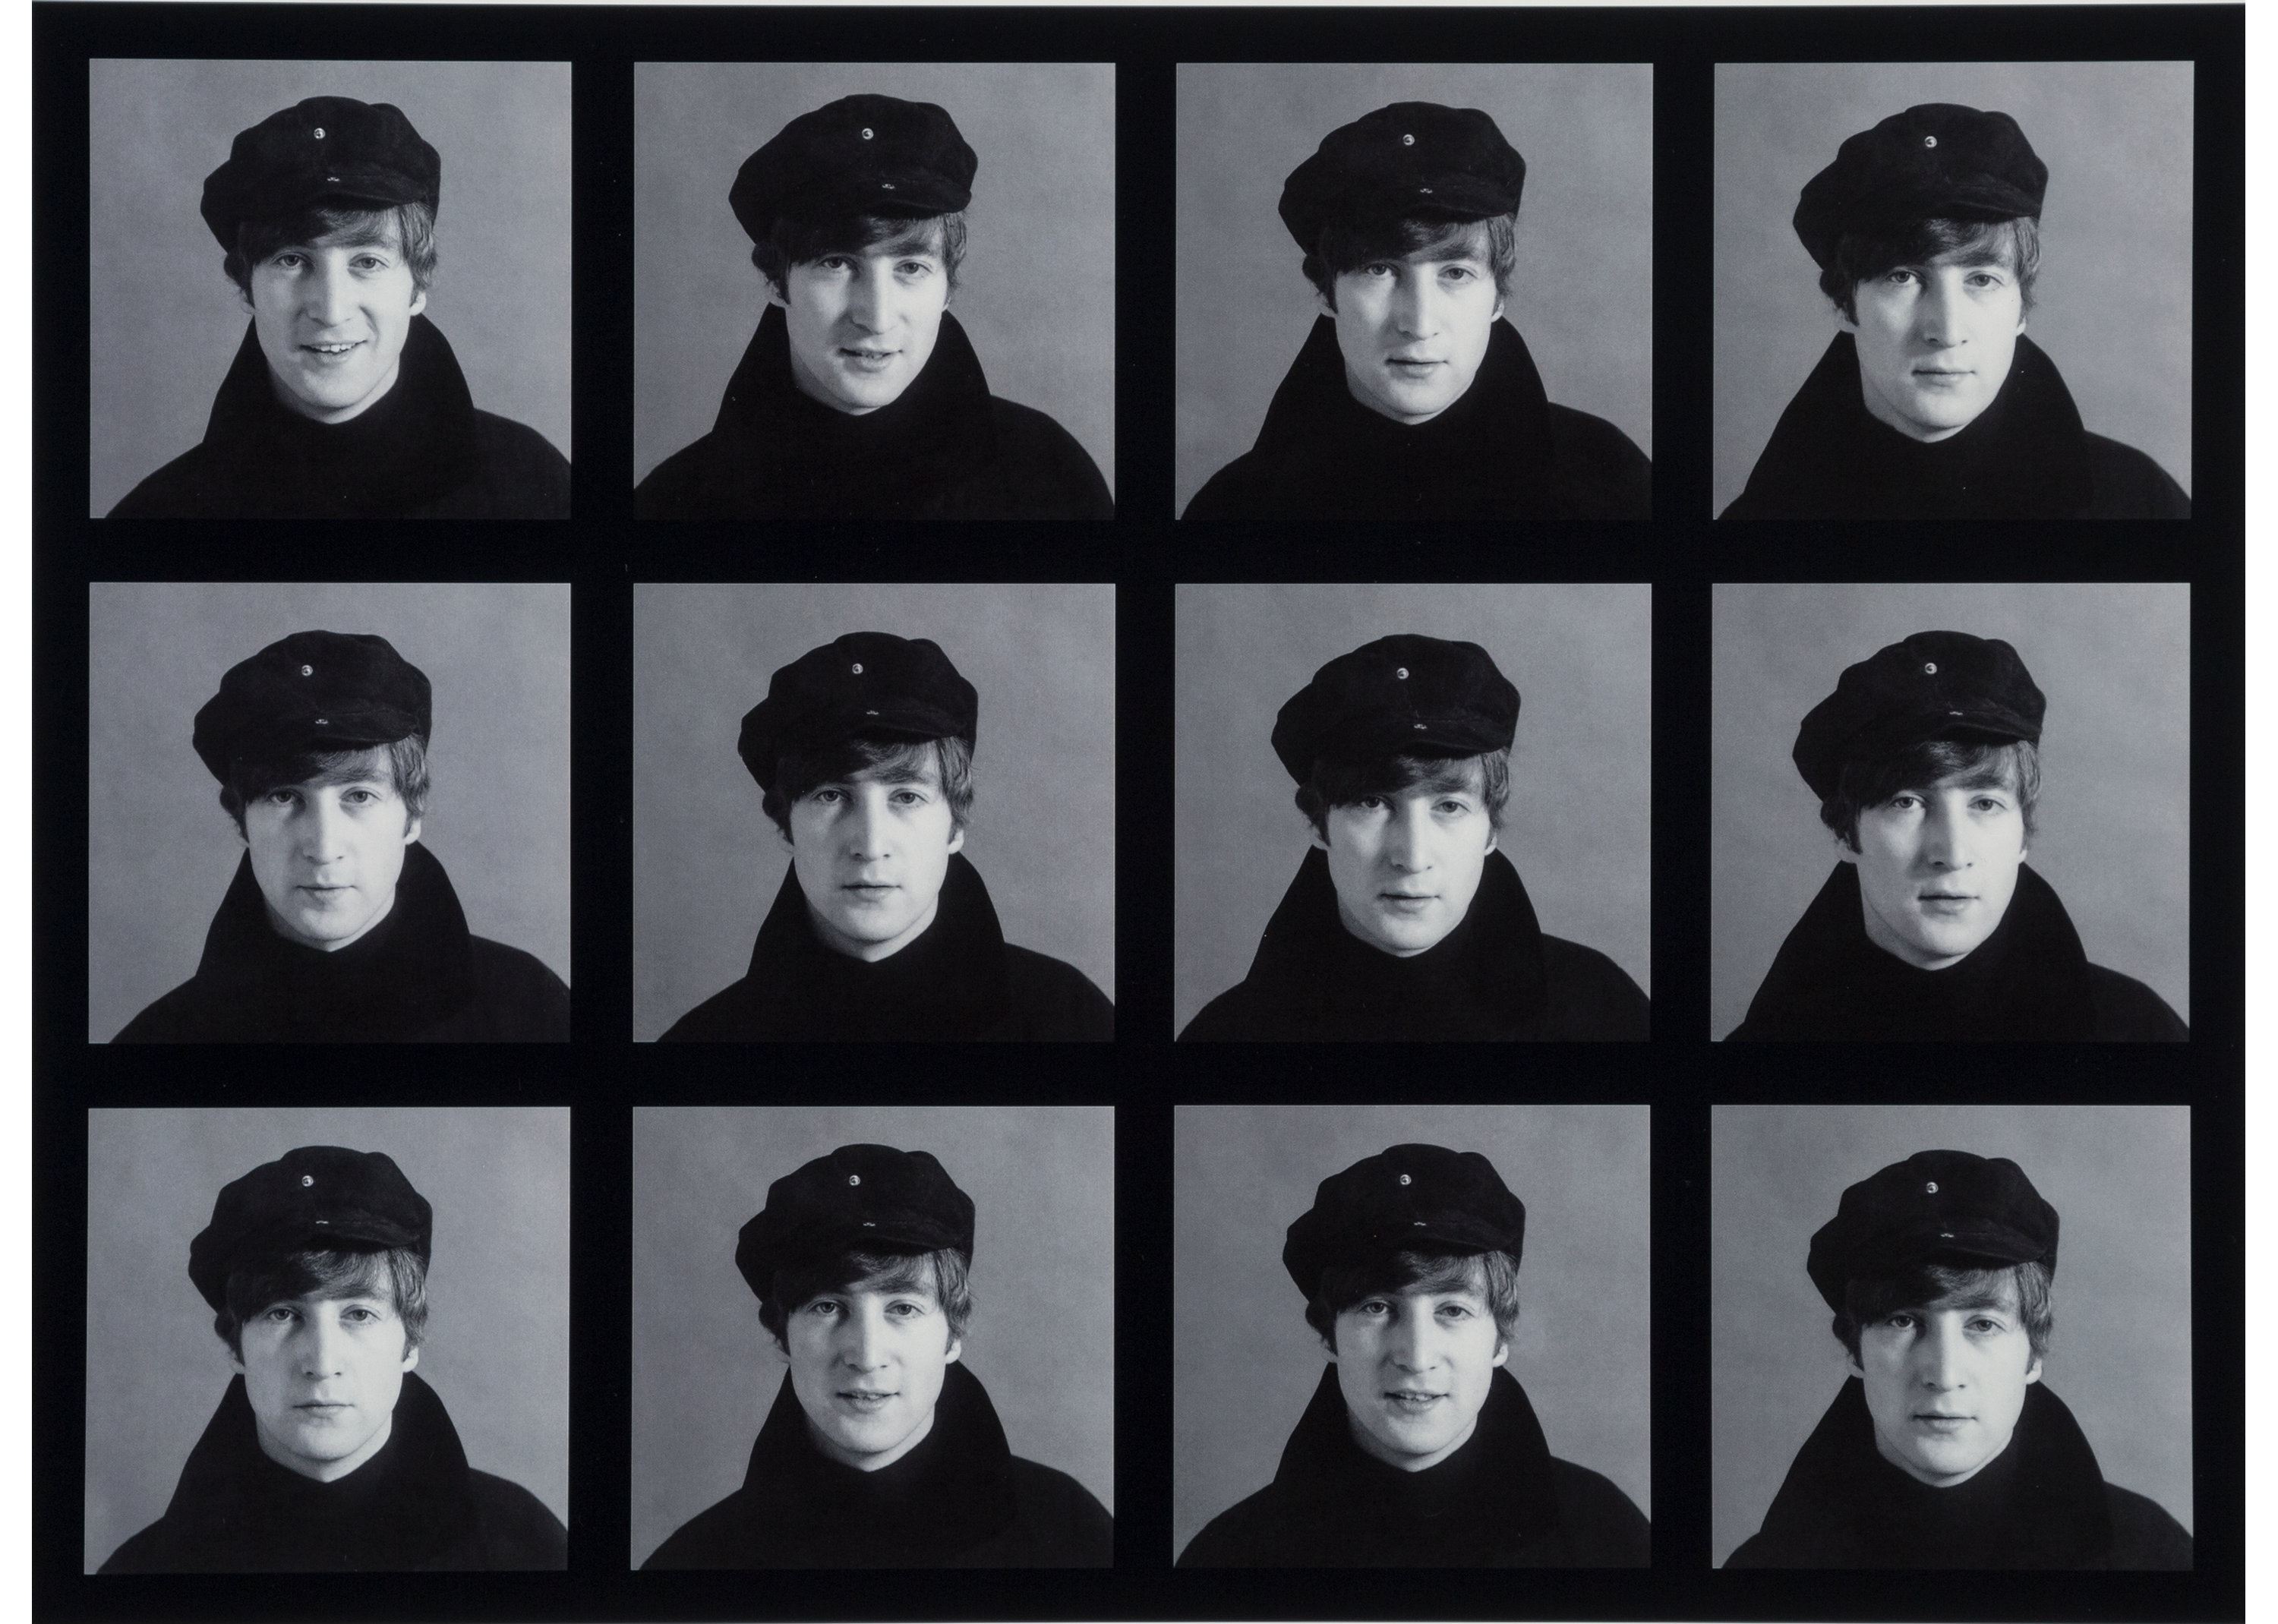 John Lennon by Robert Freeman, 1964